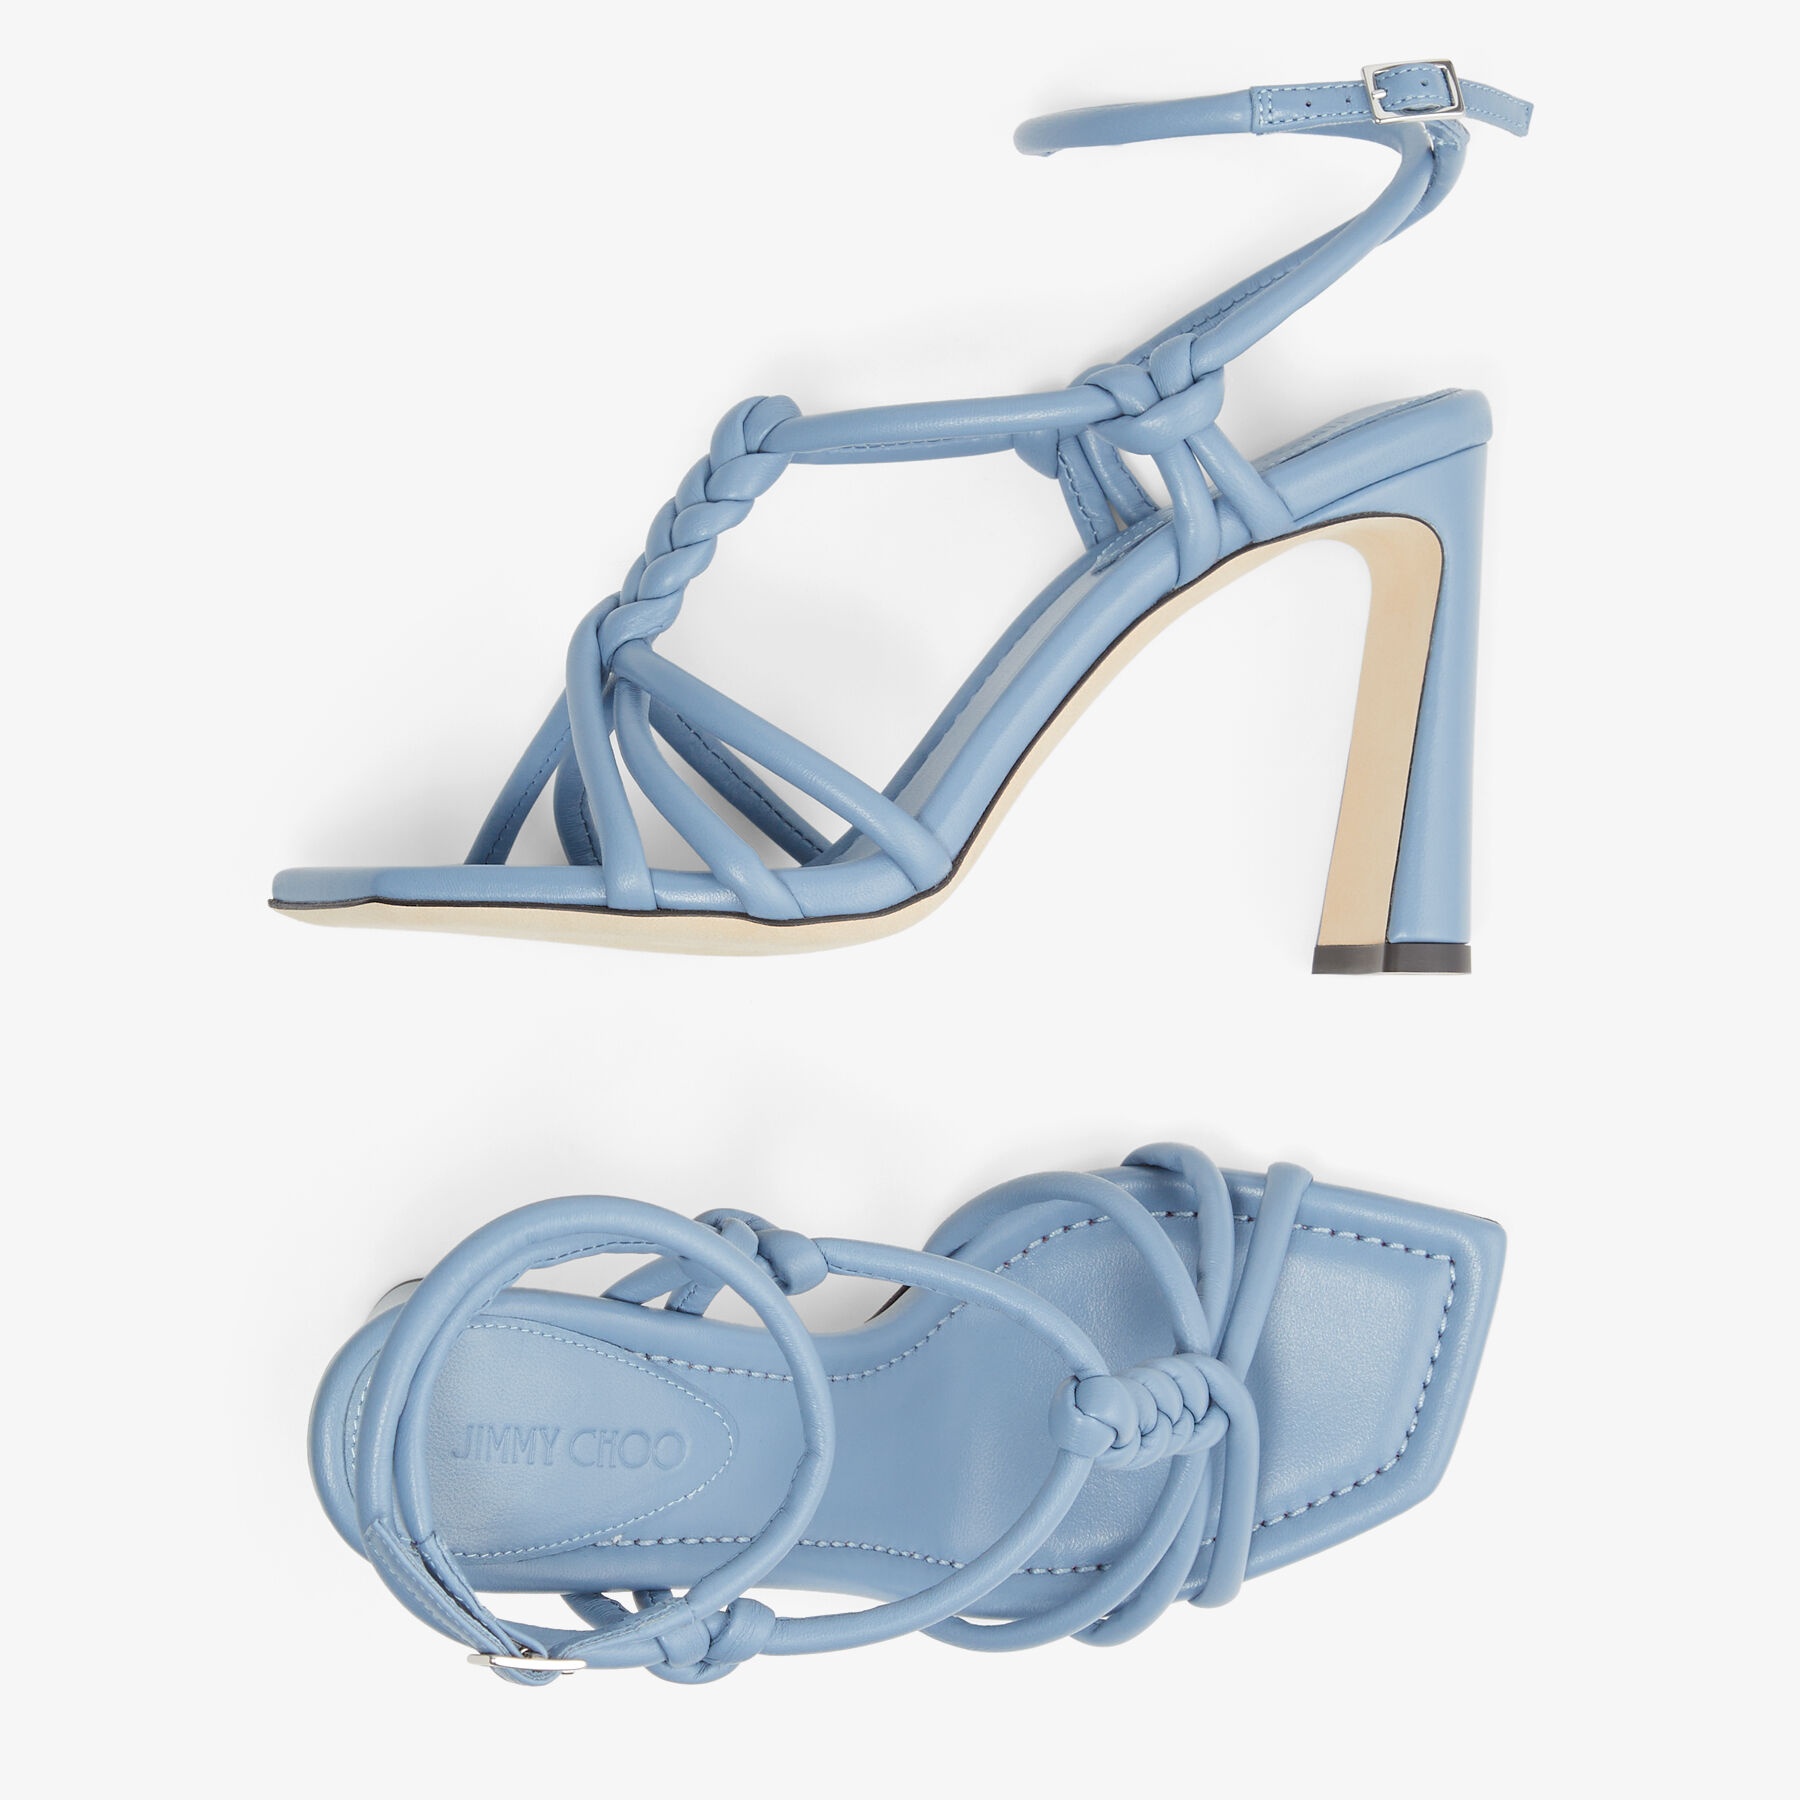 Calypso 95
Smoky Blue Nappa Leather Sandals - 5